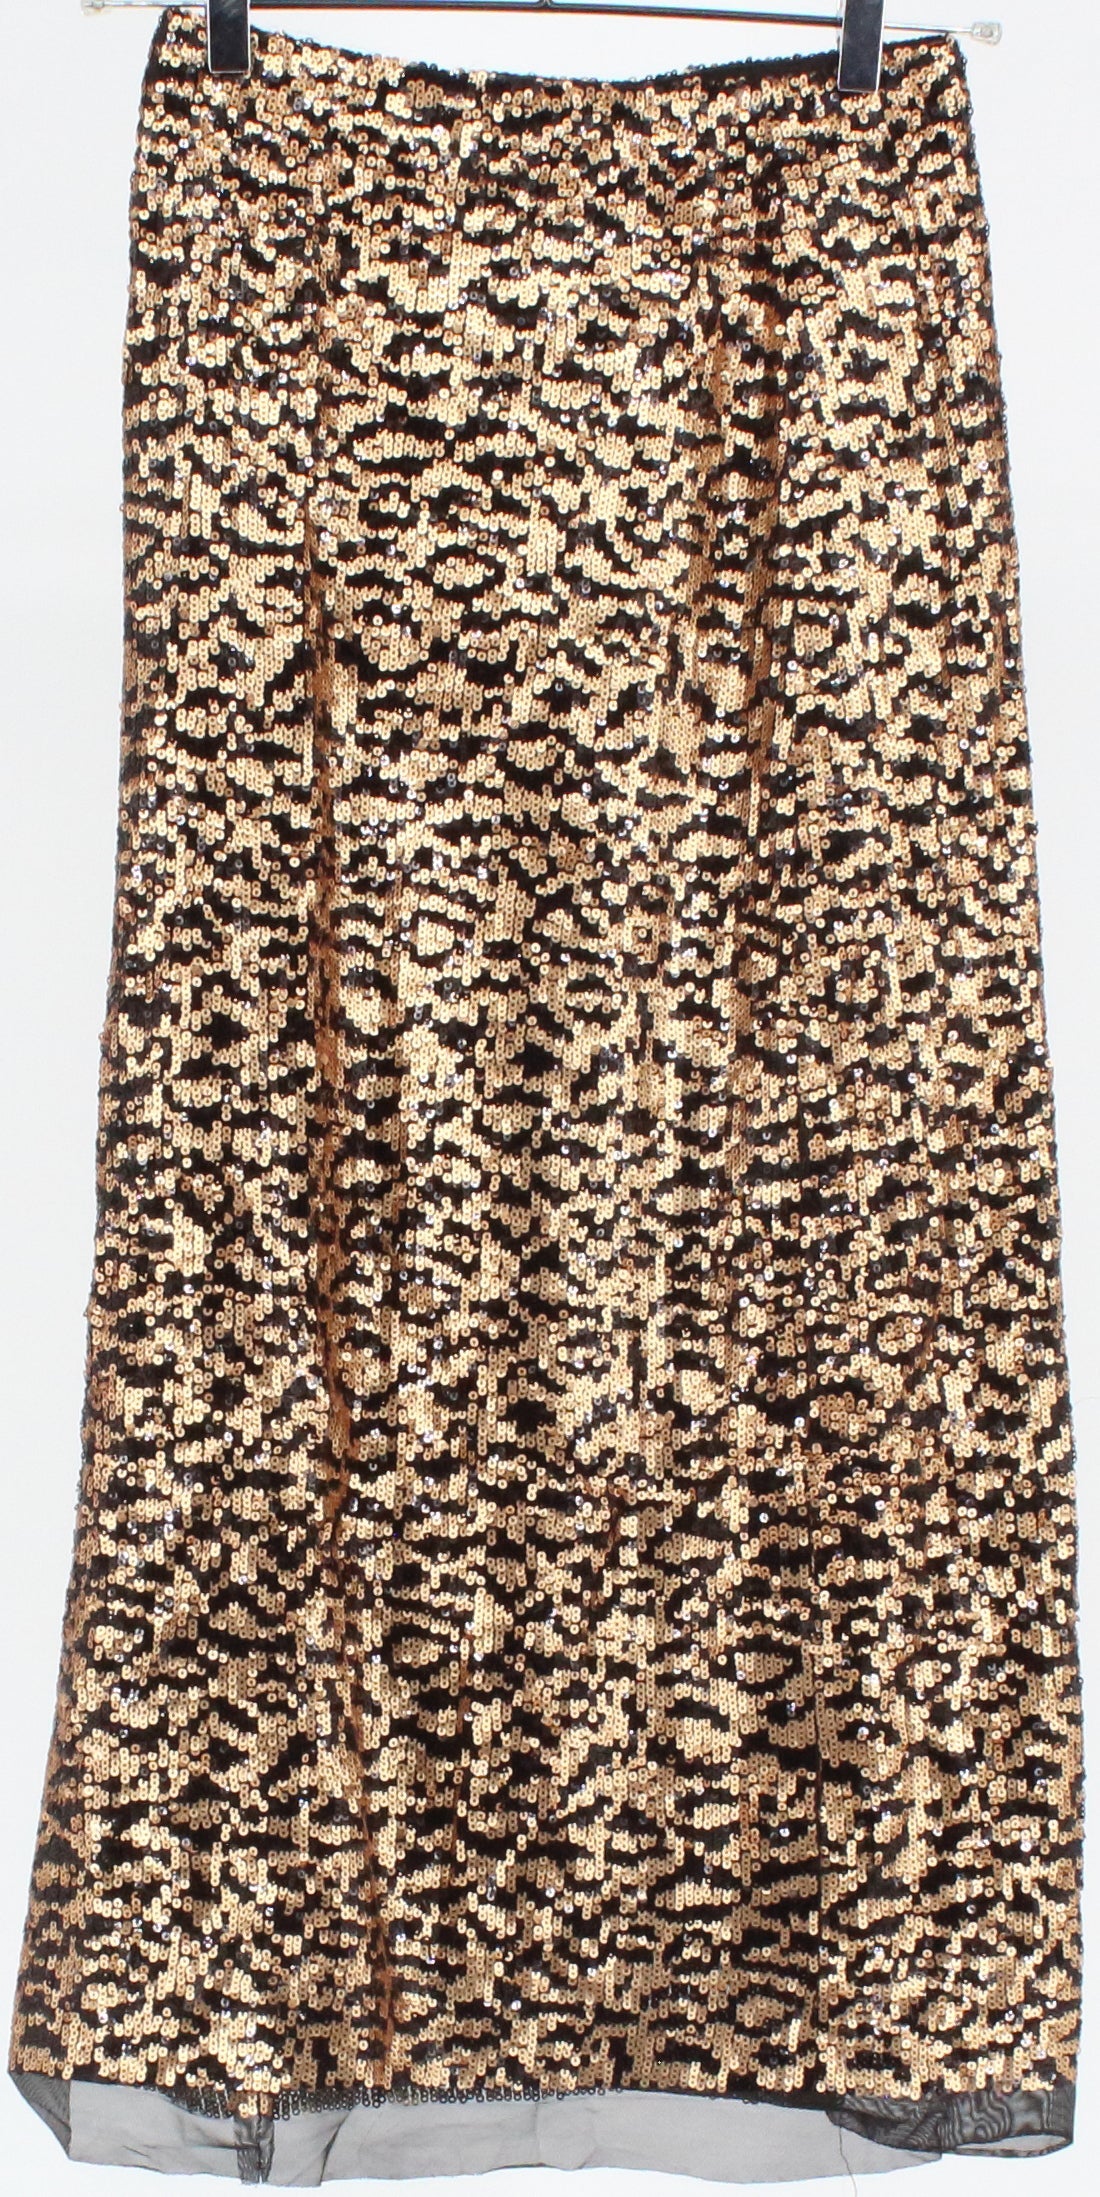 Zara Knit Gold and Black Sequins Long Skirt